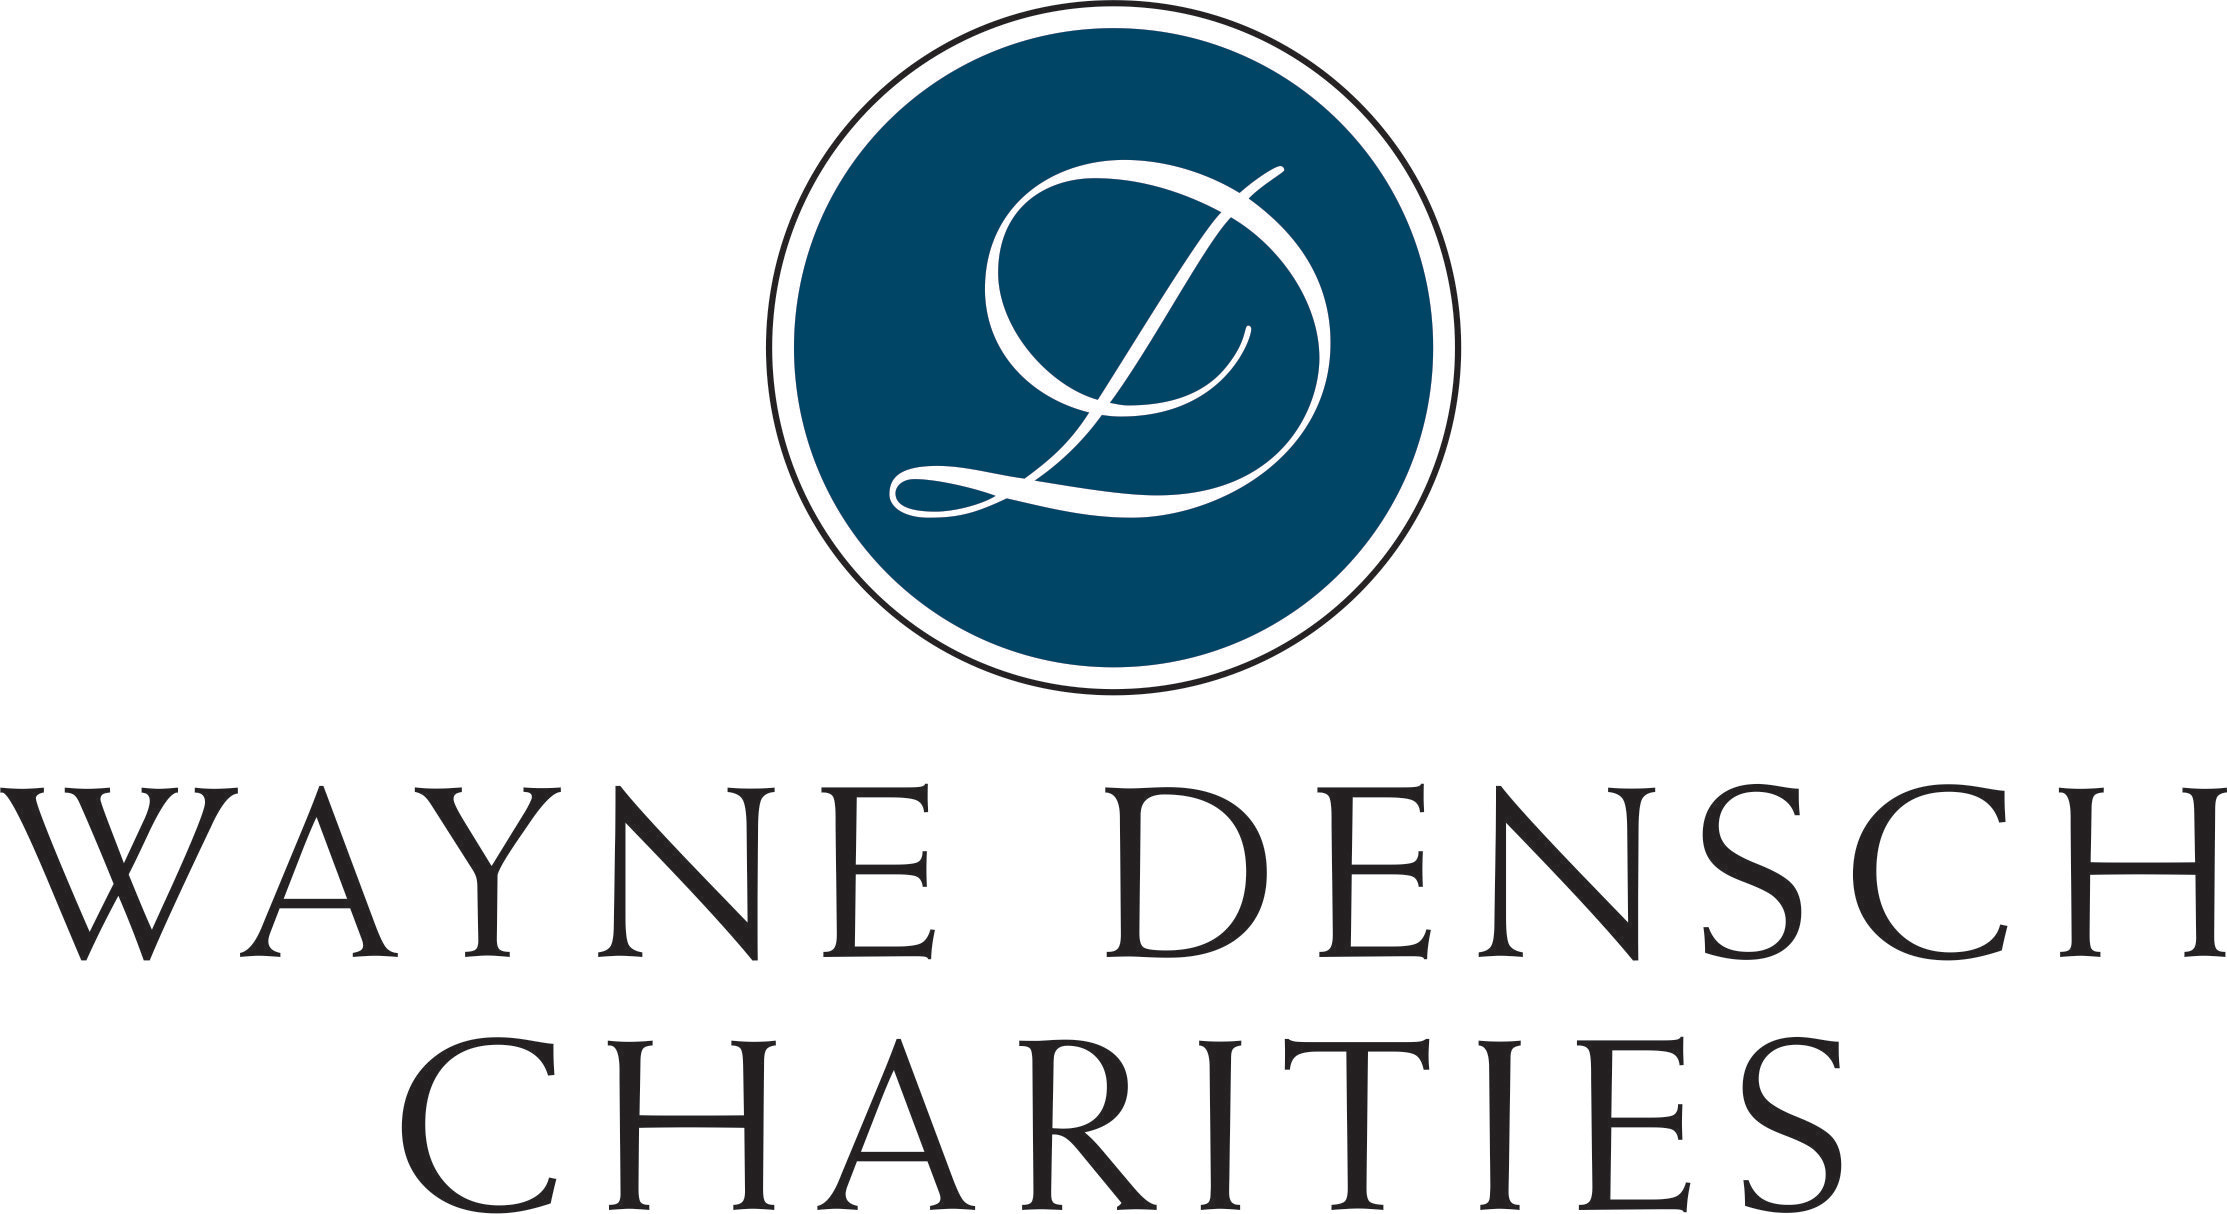 Wayne Densch Charities